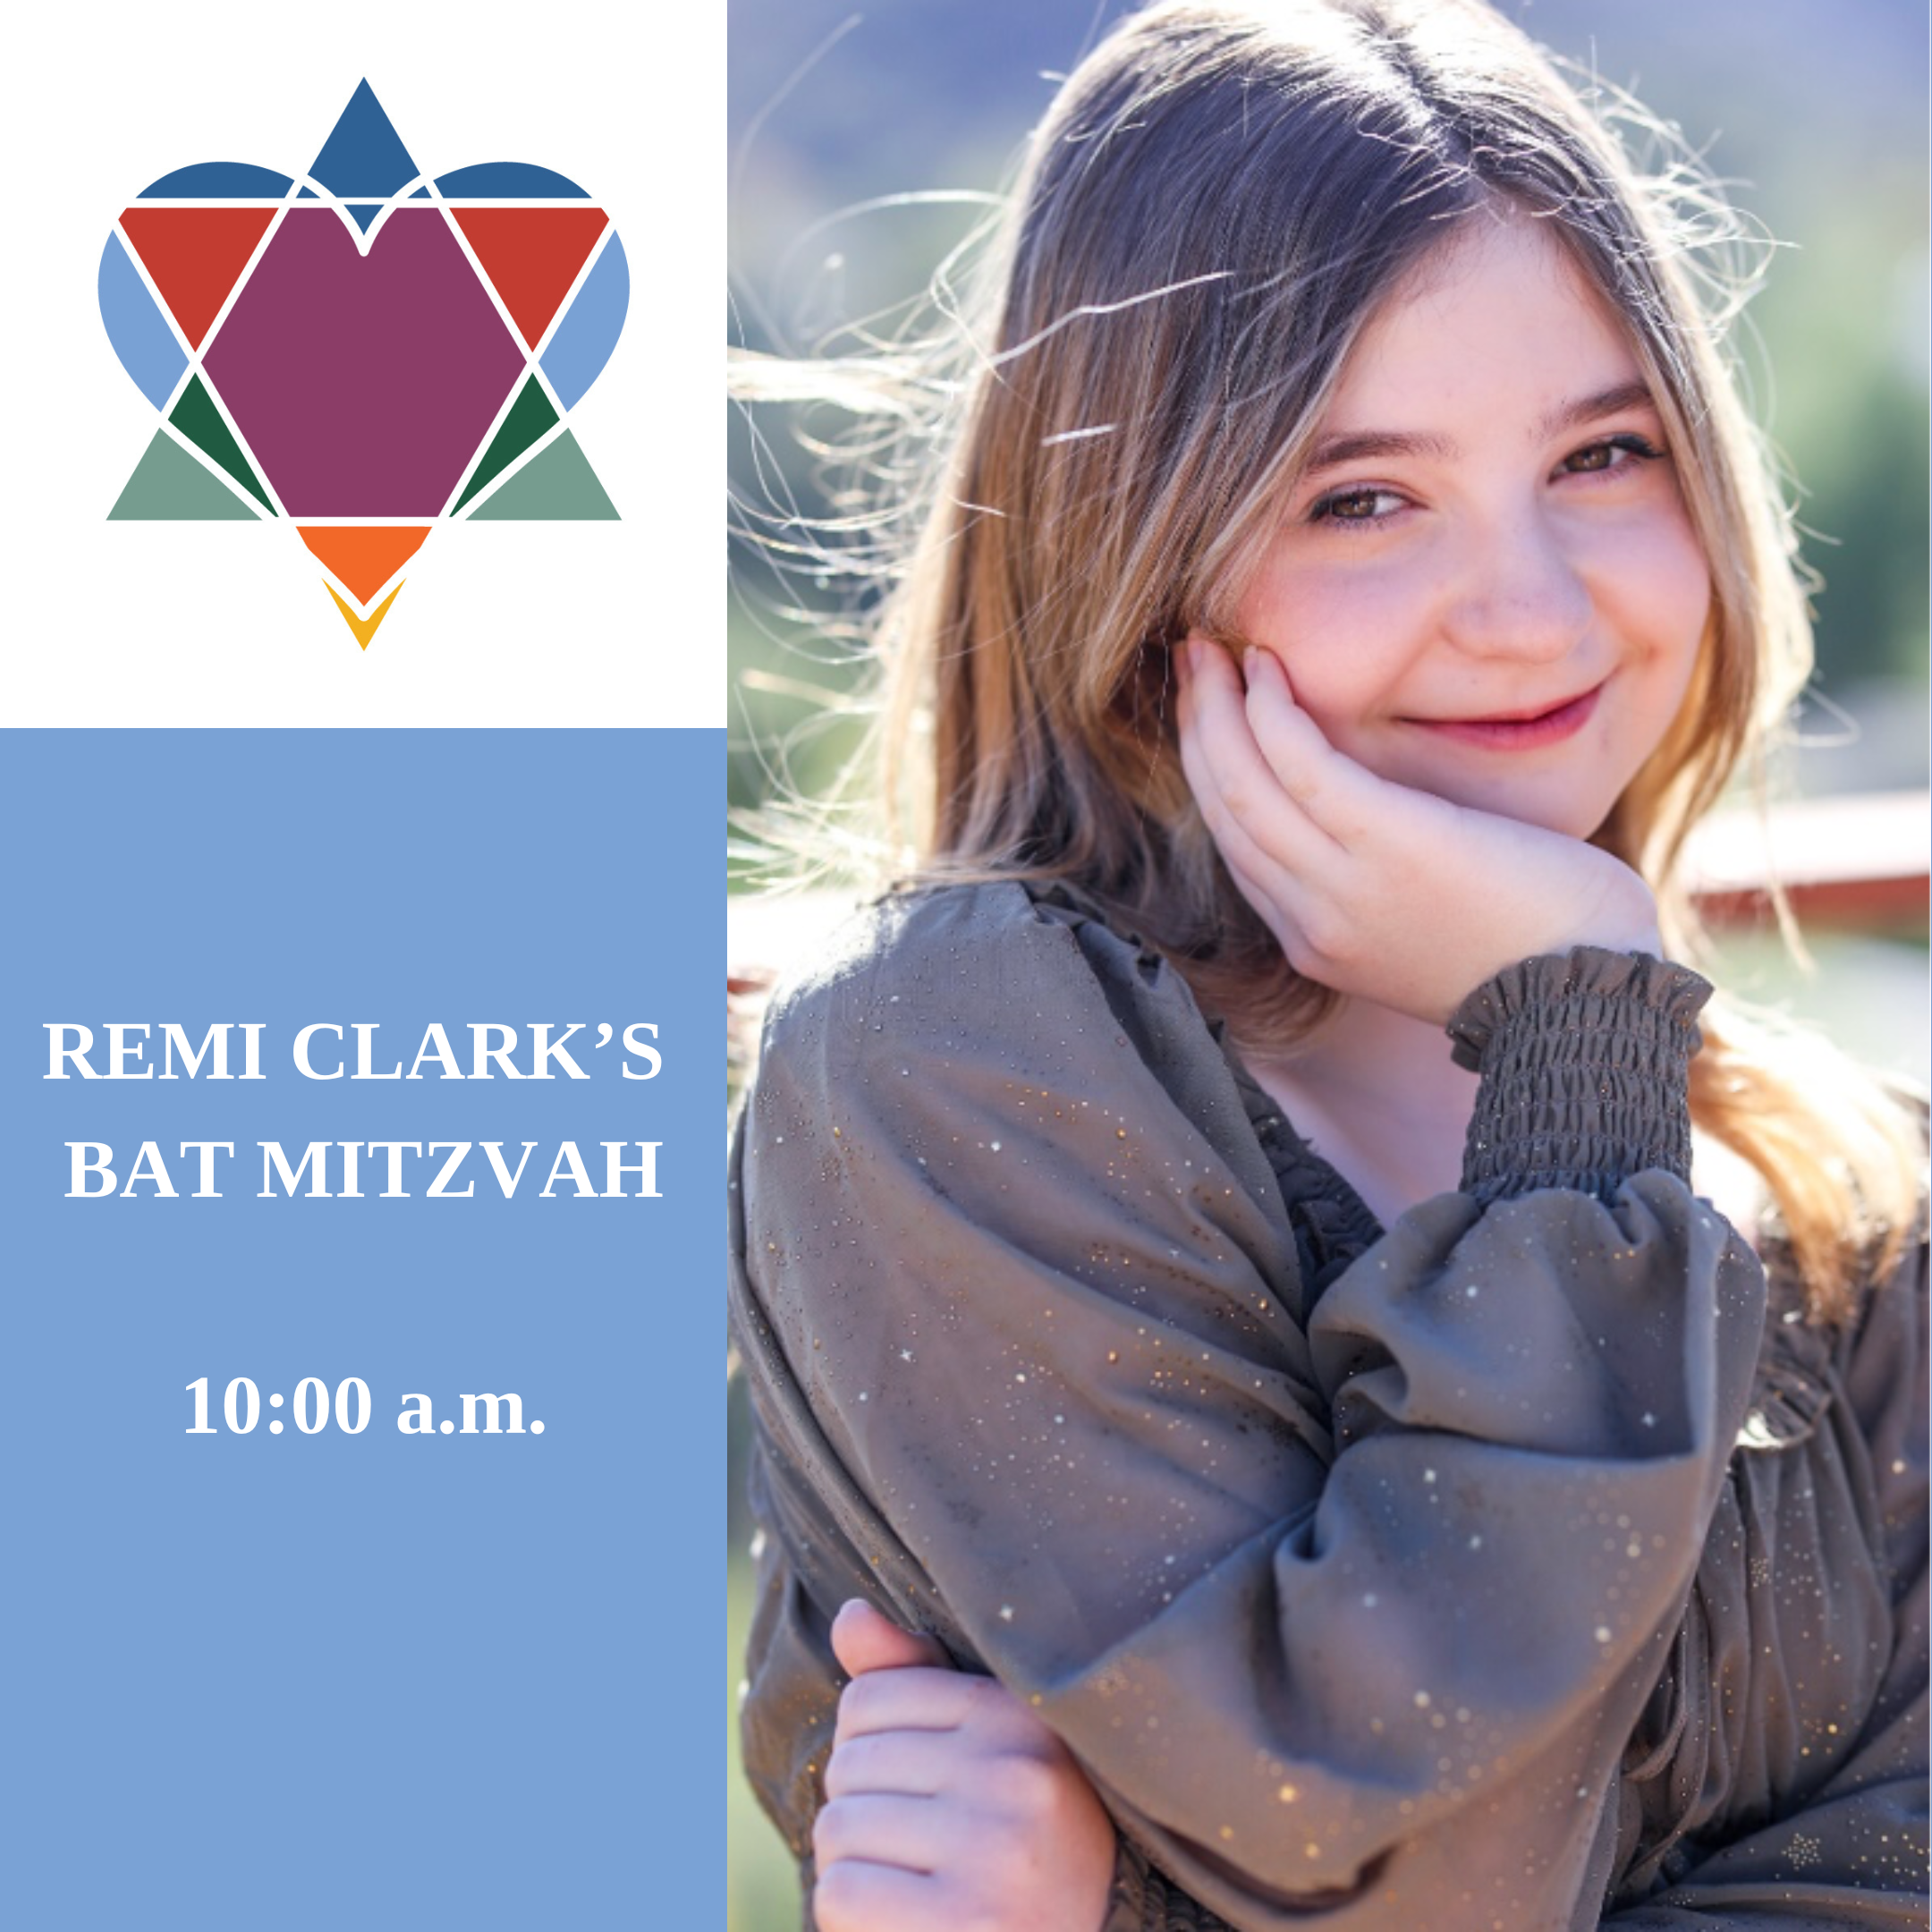 REMI CLARK'S BAT MITZVAH